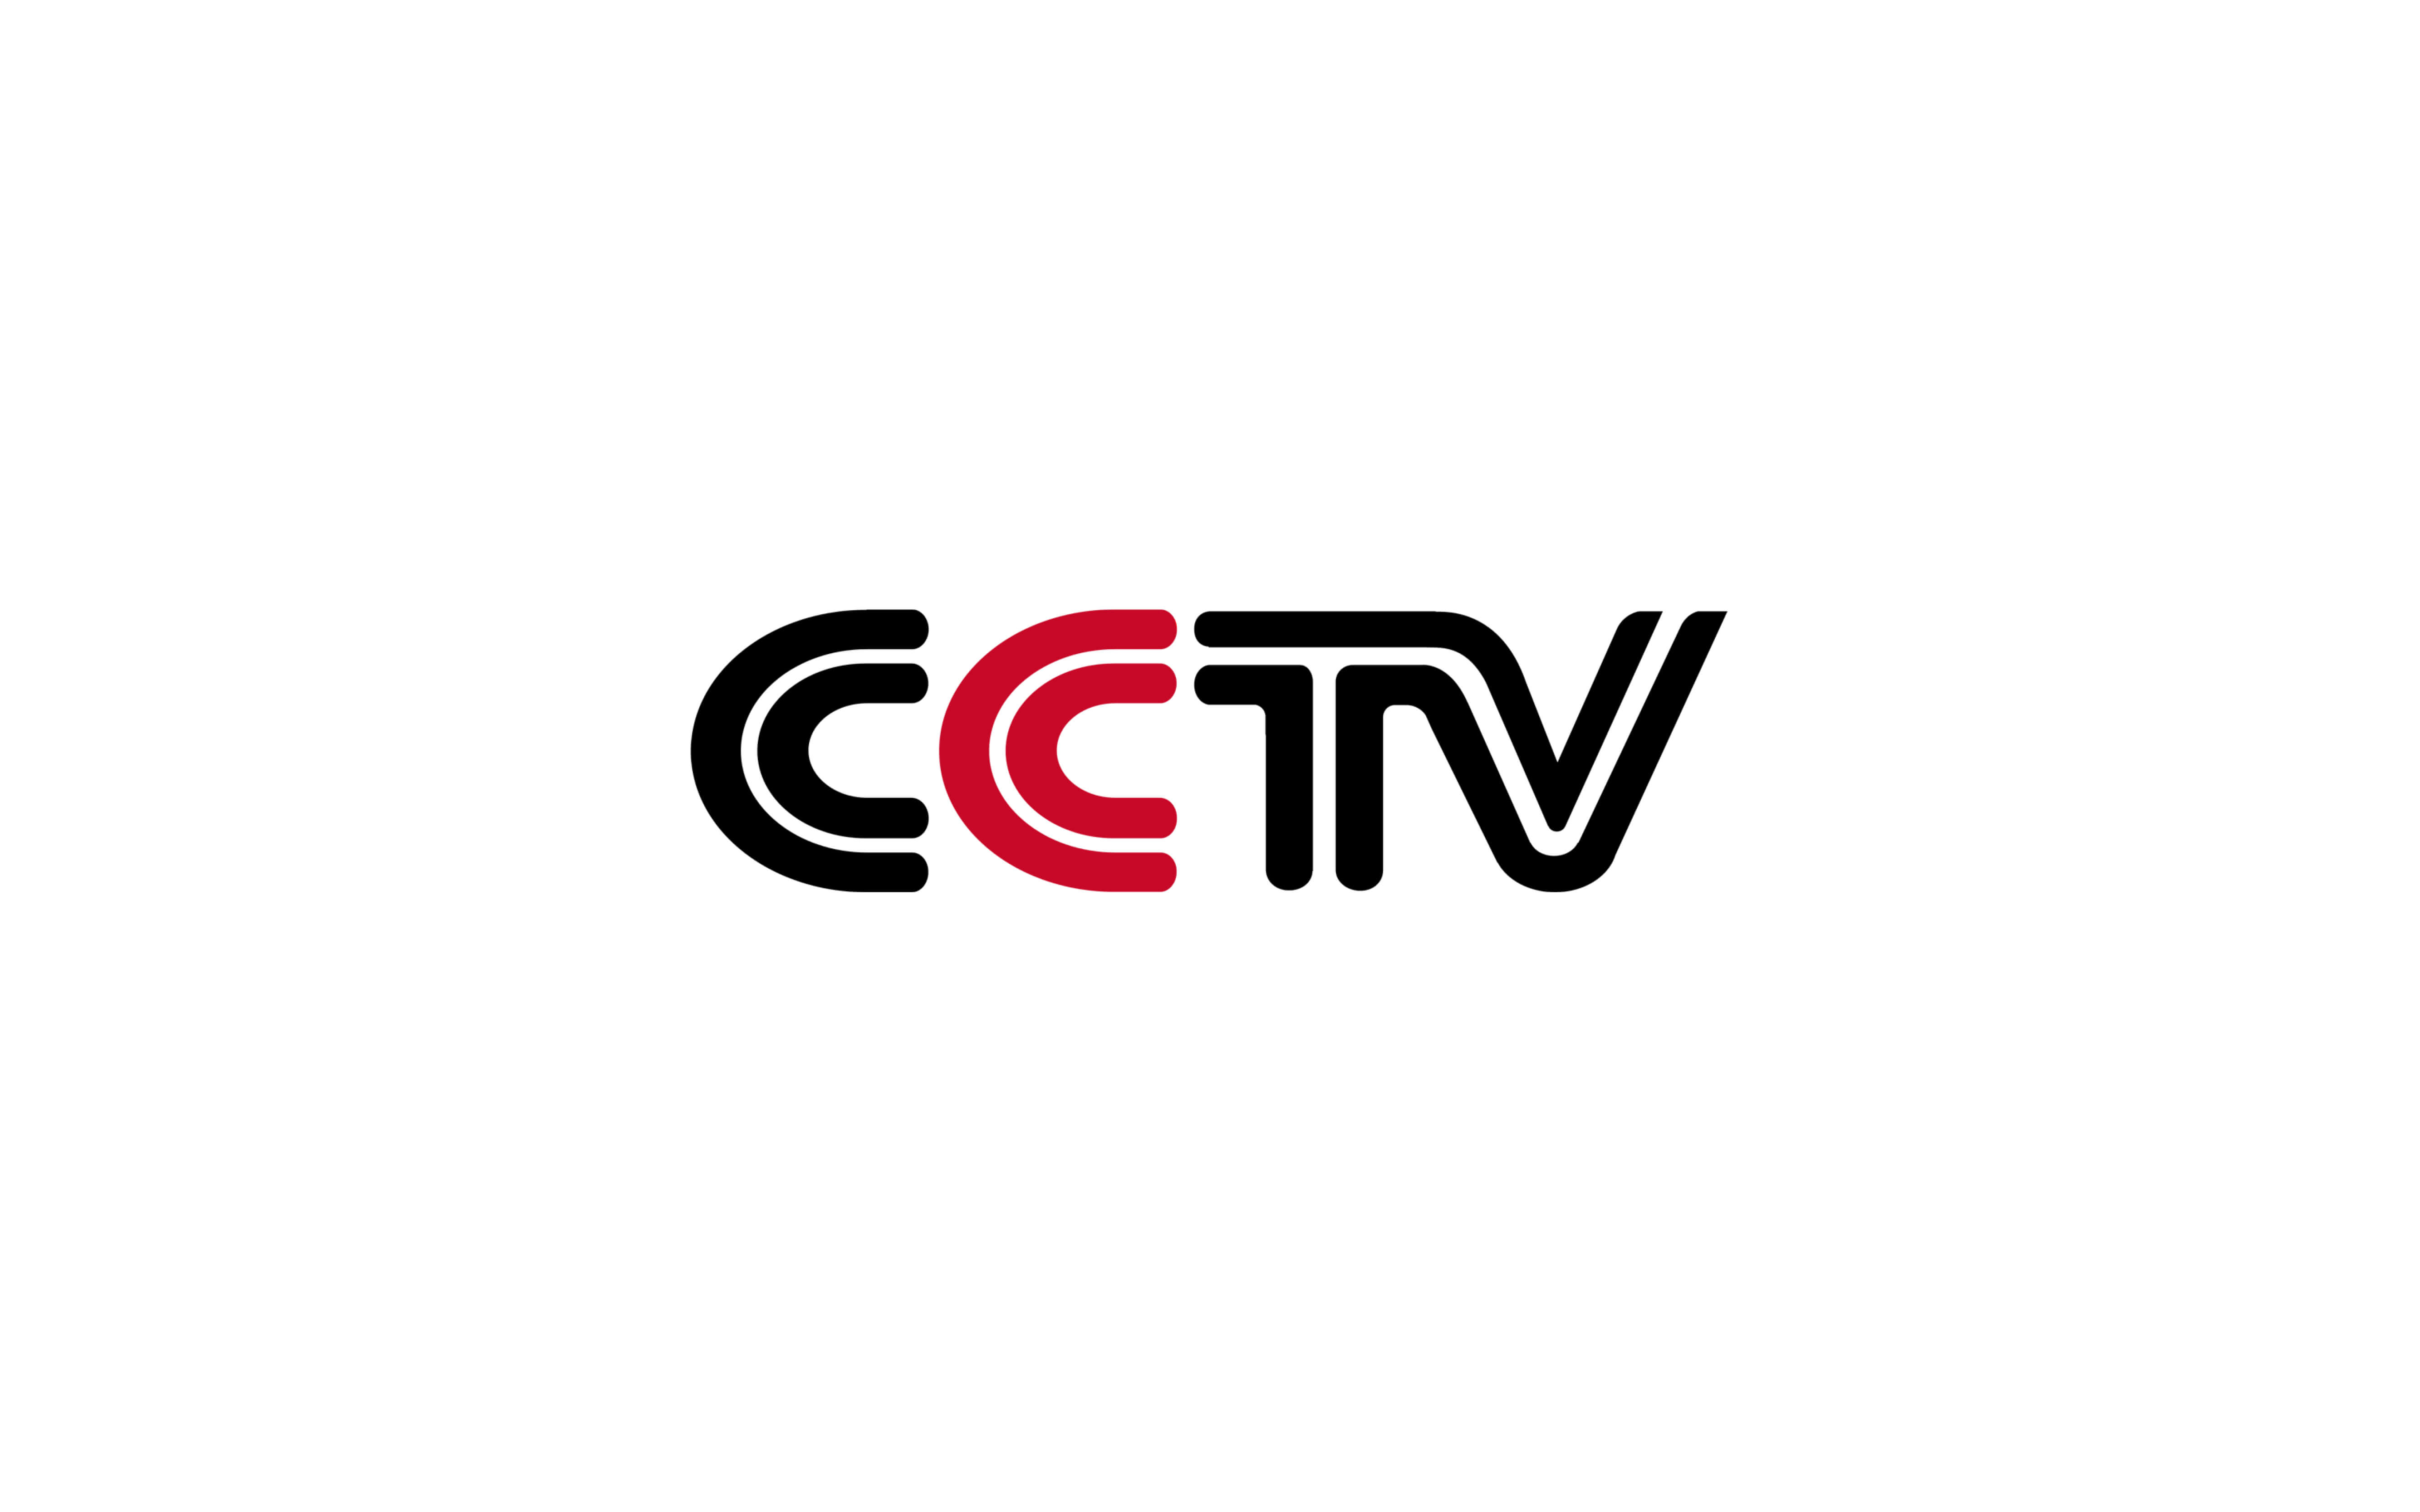 CCTV Logo - cctv logo in black and red - Trendalytics